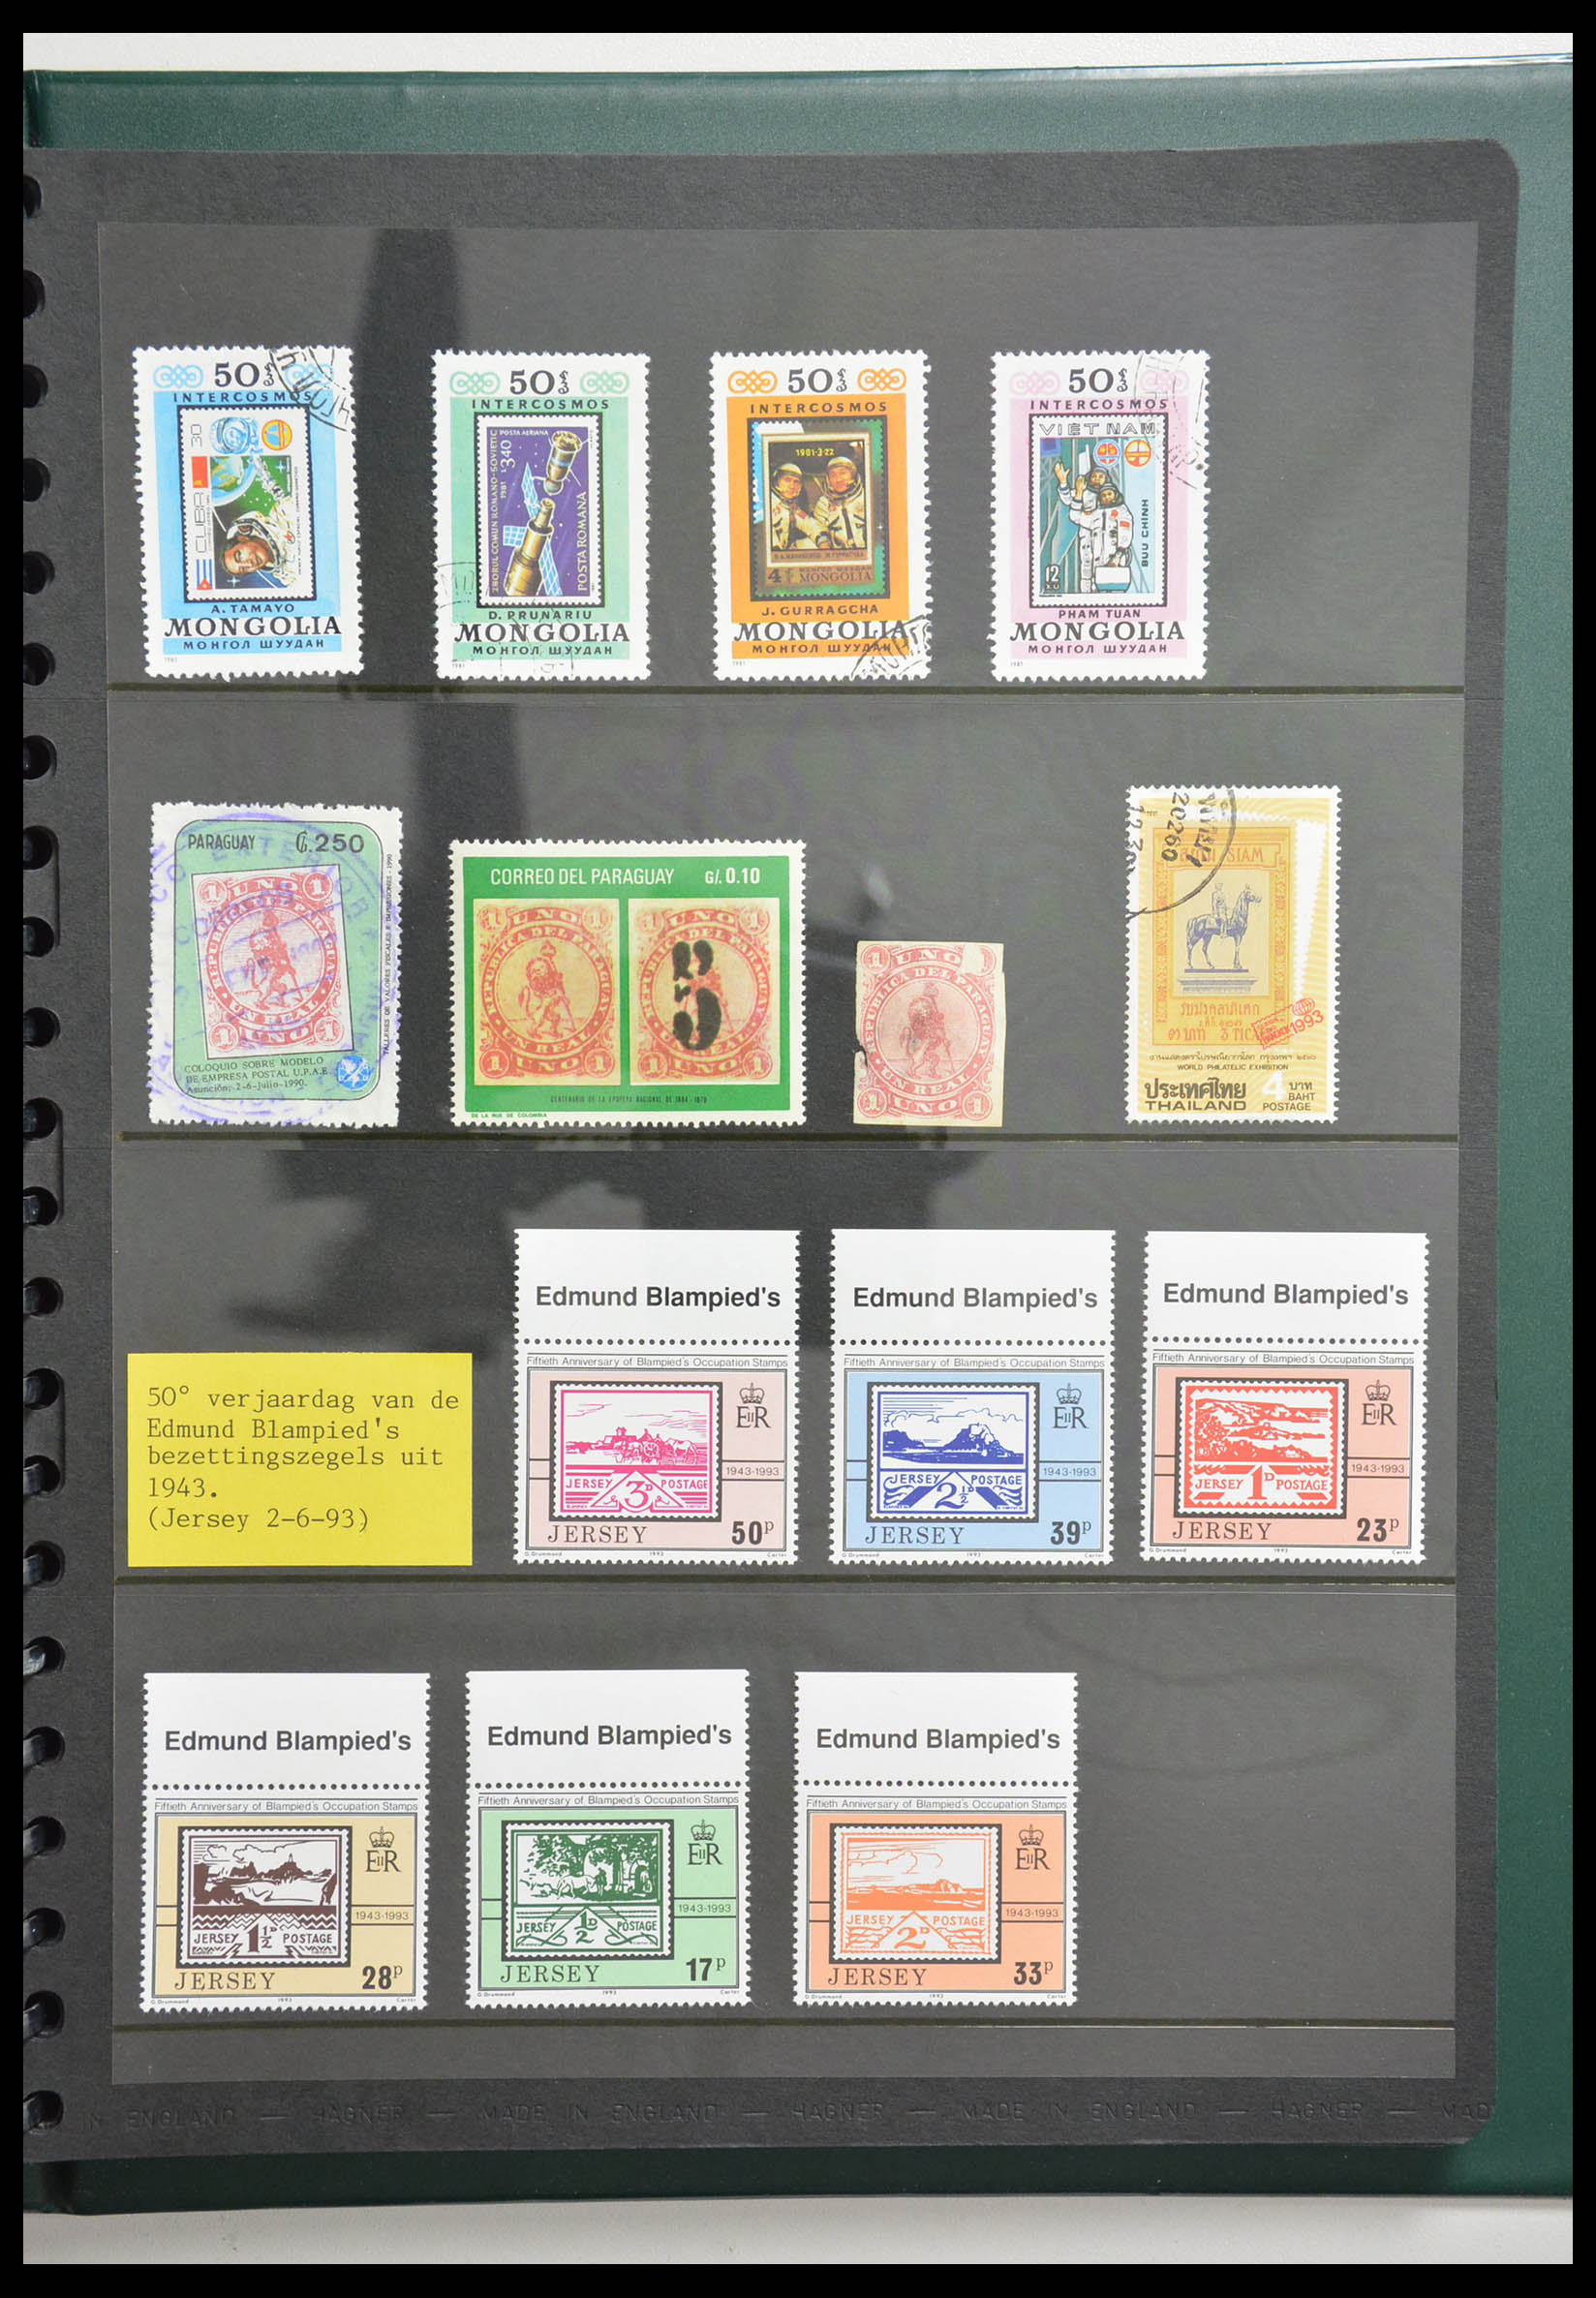 28337 071 - 28337 Postzegel op postzegel 1840-2001.